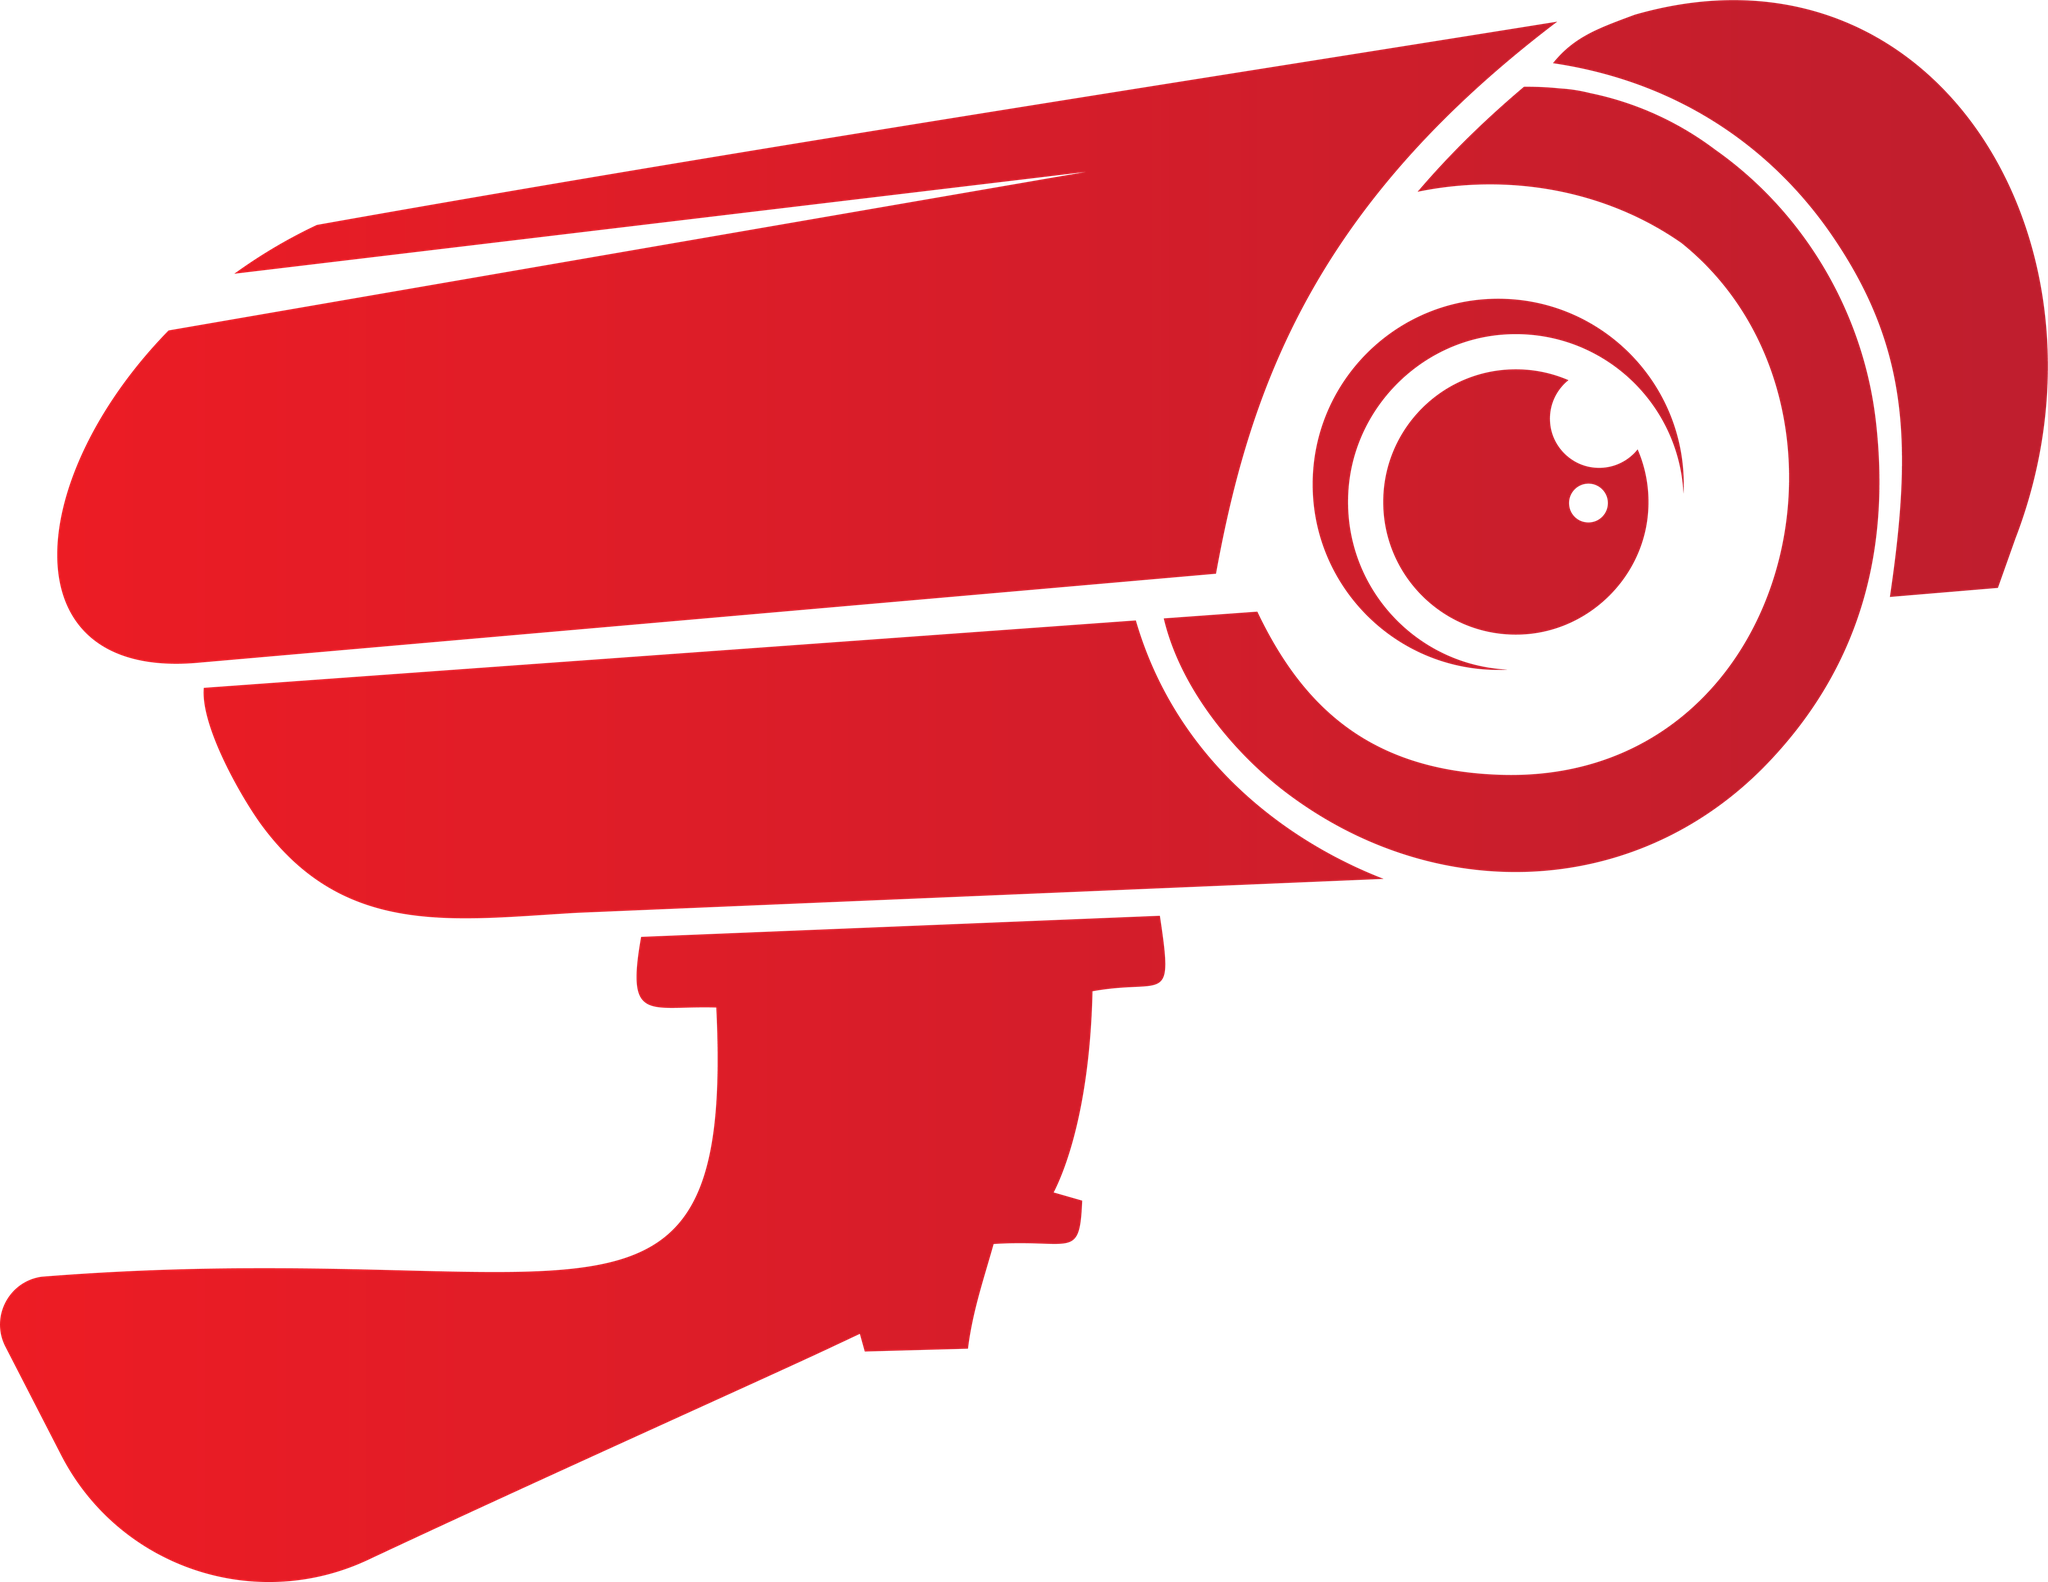 CCTV Camera Installation in Chennai